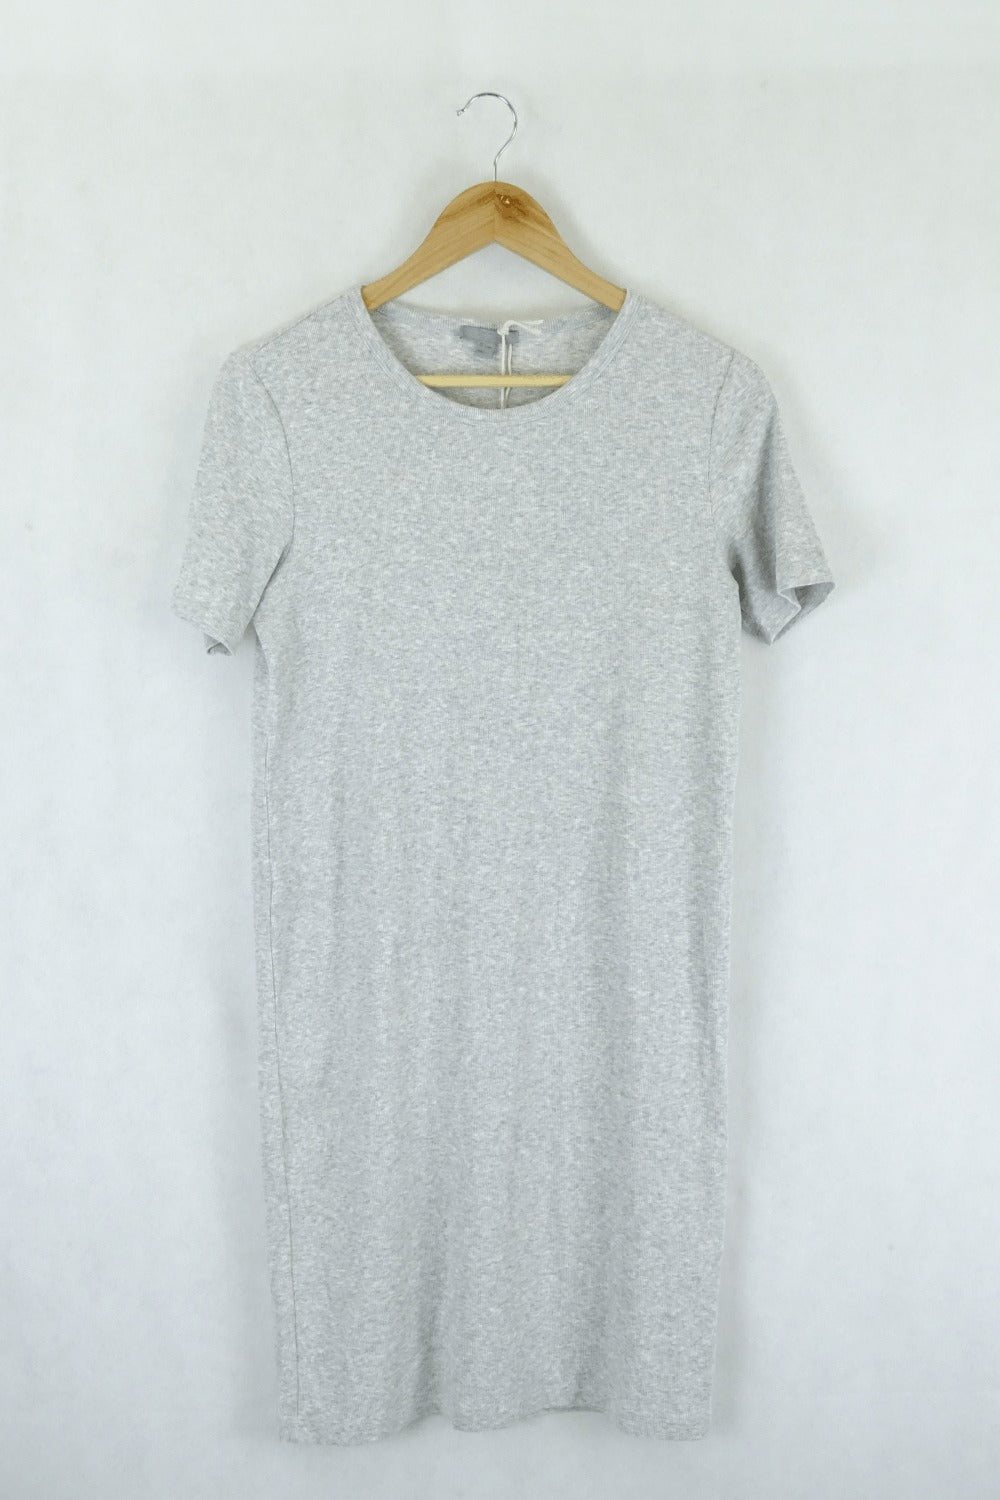 Cos Grey Ribbed Dress S